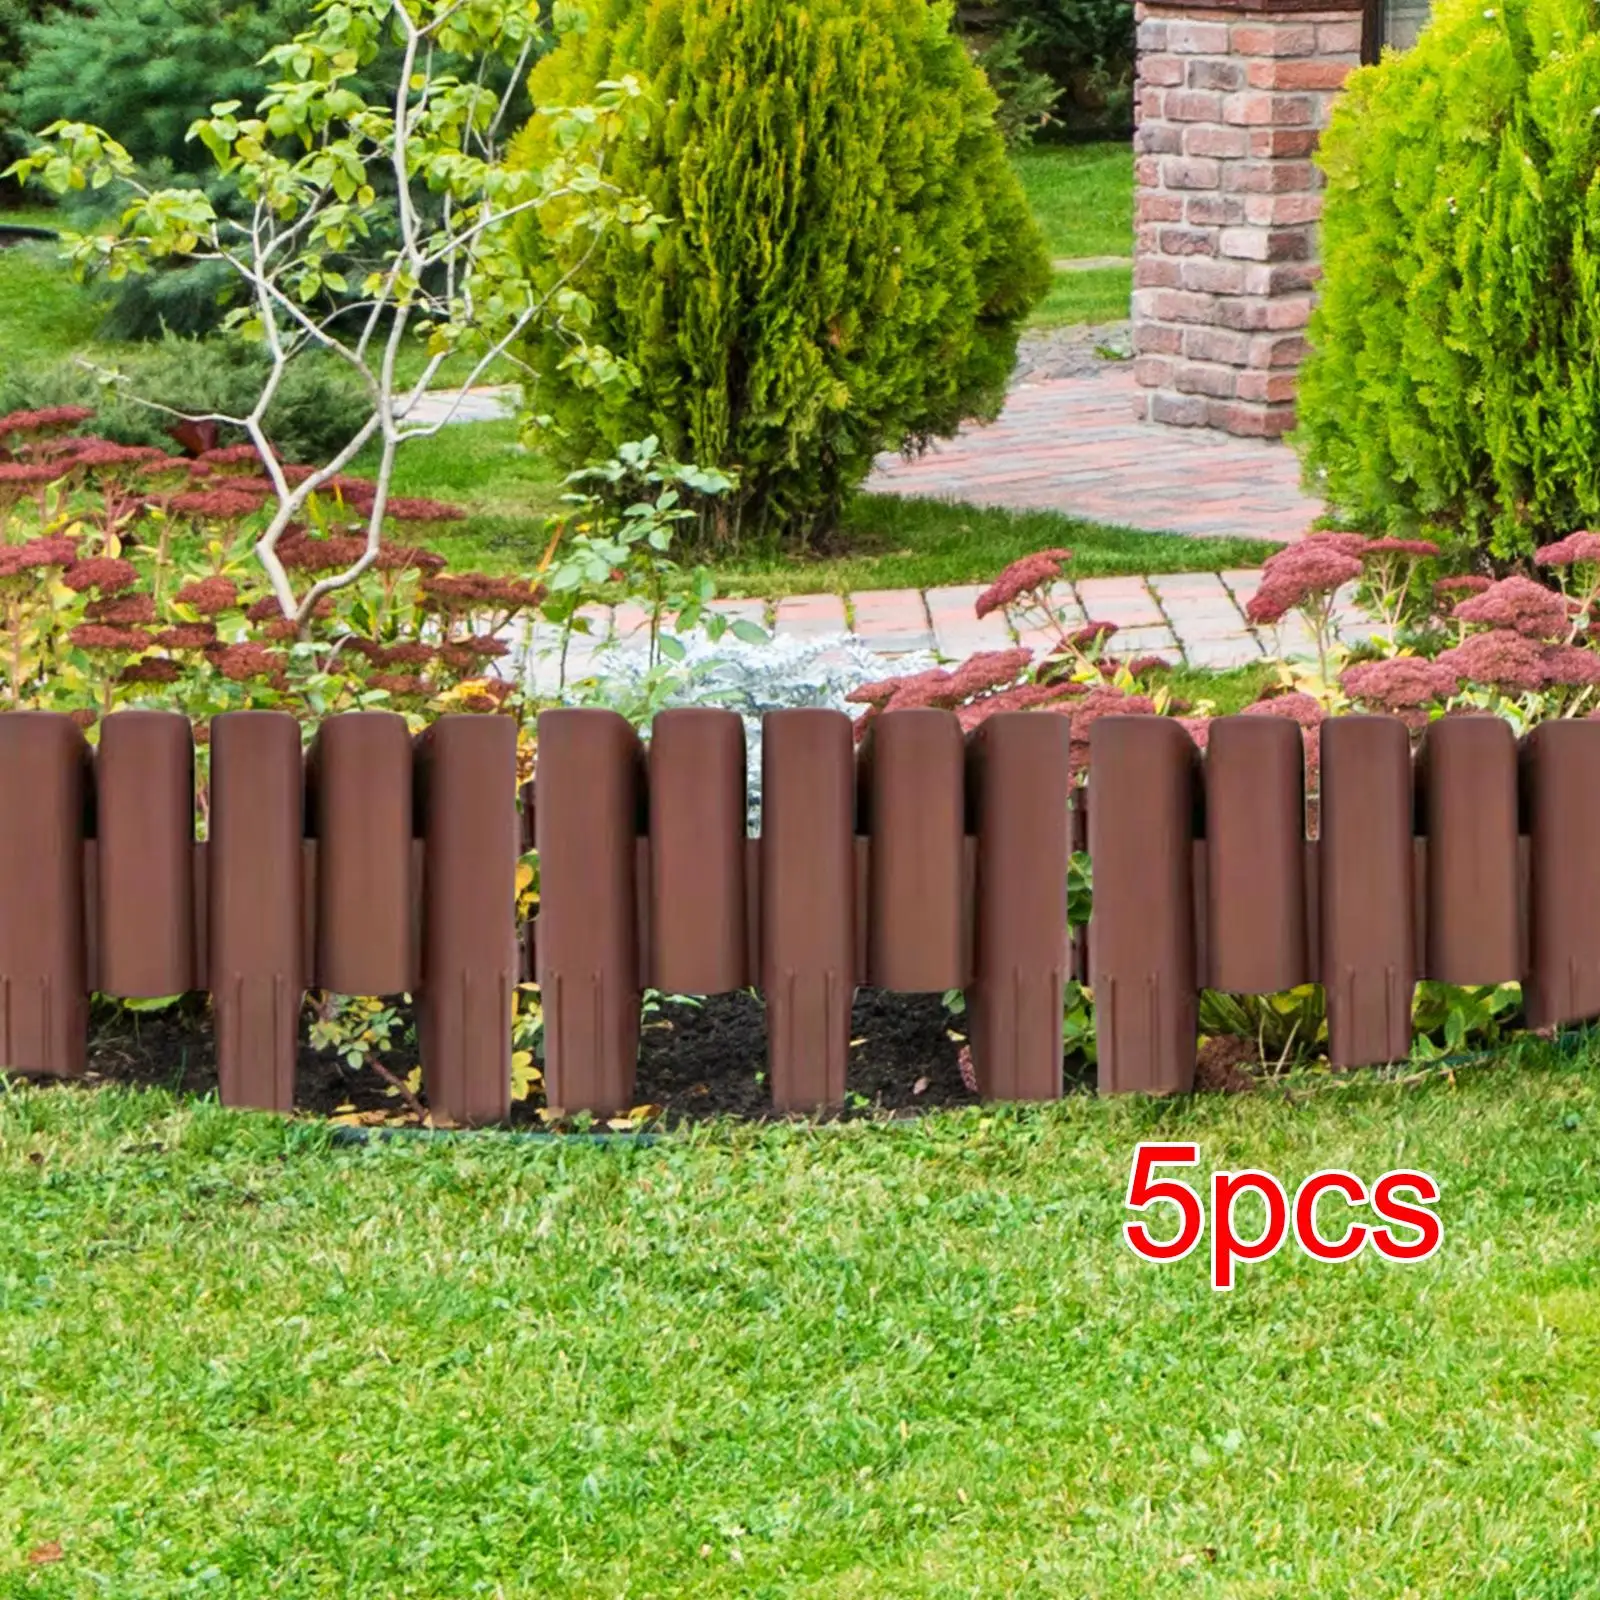 5Pcs Garden Edging Border Durable Fence Border for Walkway Patio Flower Bed